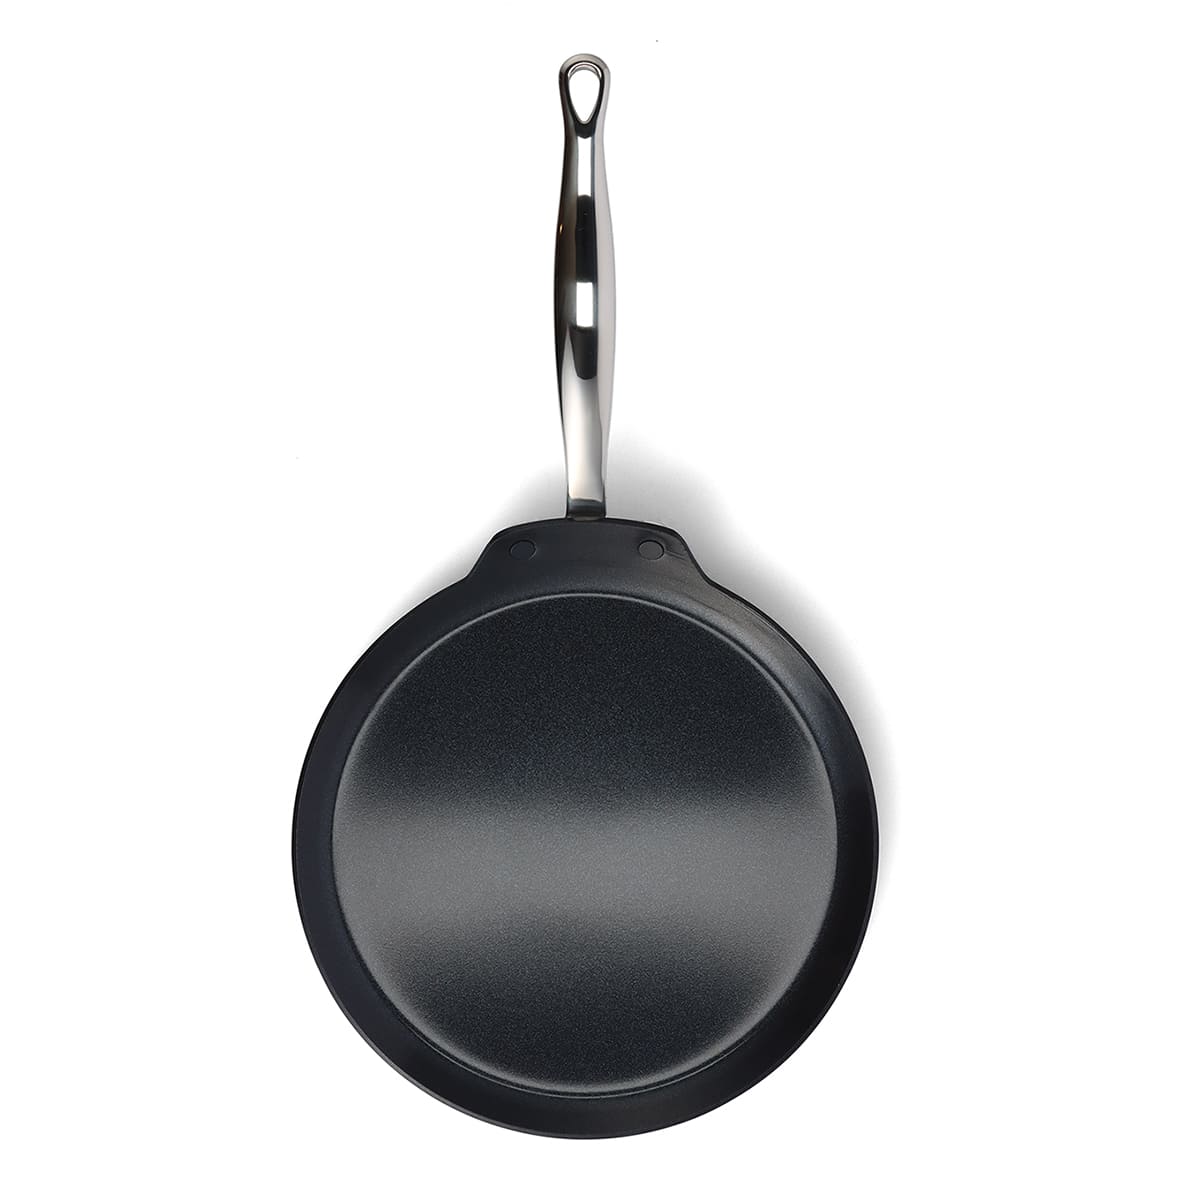 CC005338-001 - Barcelona Pro pancake pan, black - 28cm - Product Image 3